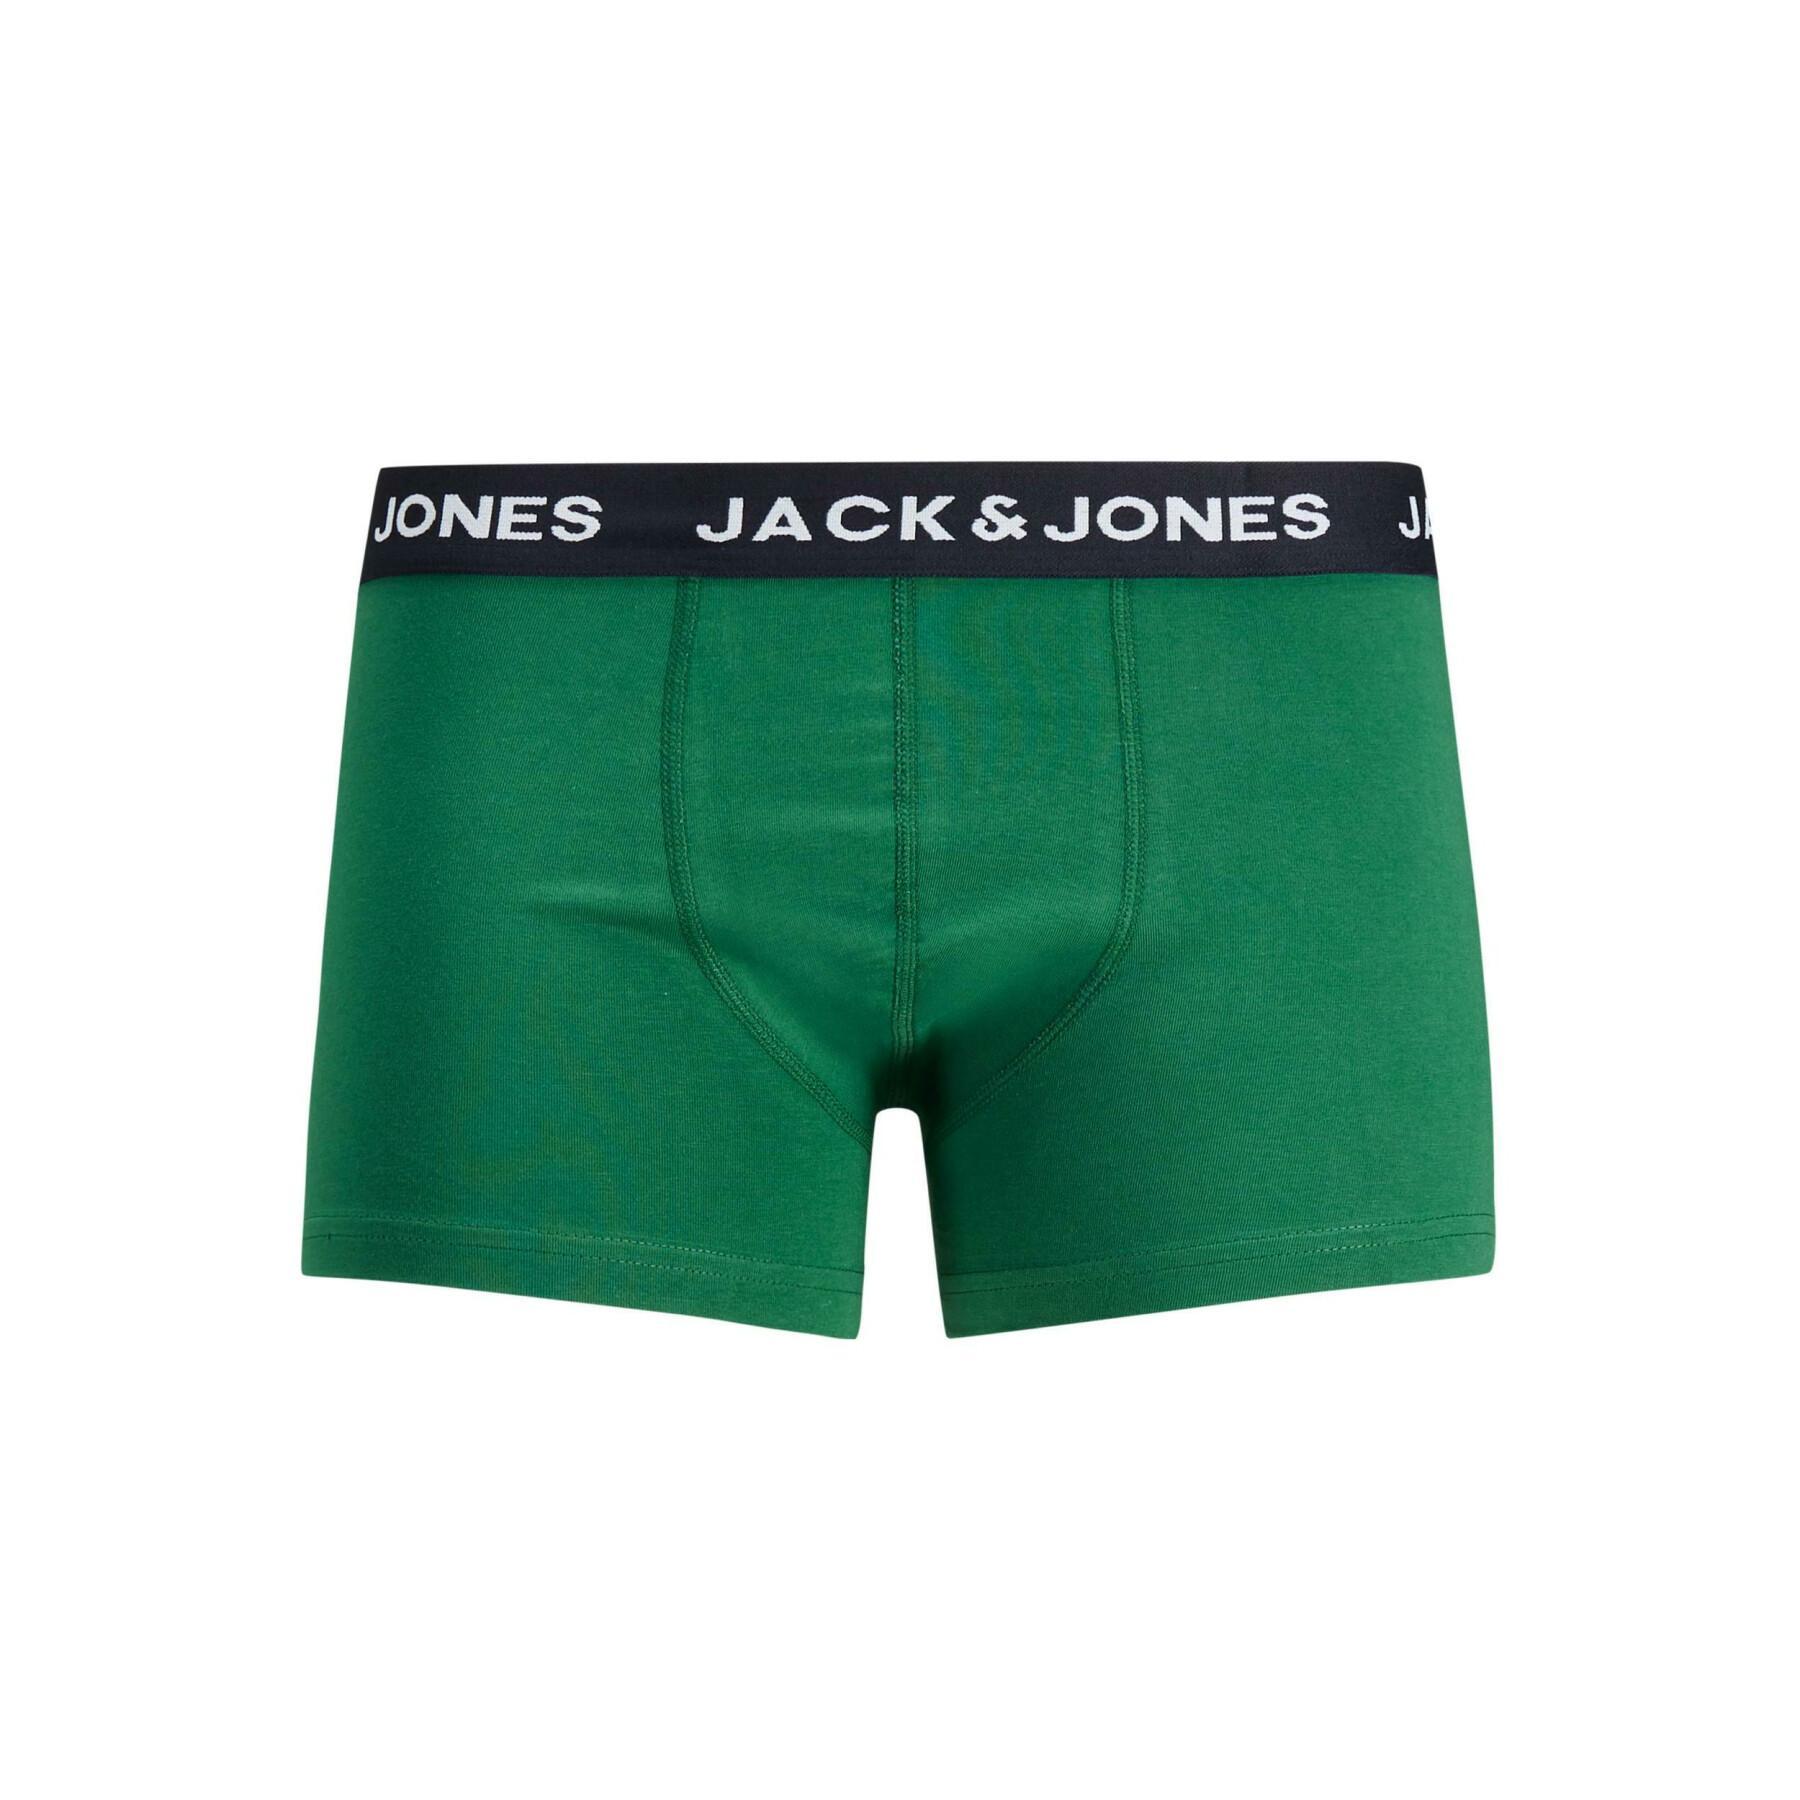 Set of 2 boxer shorts Jack & Jones Jacfrank